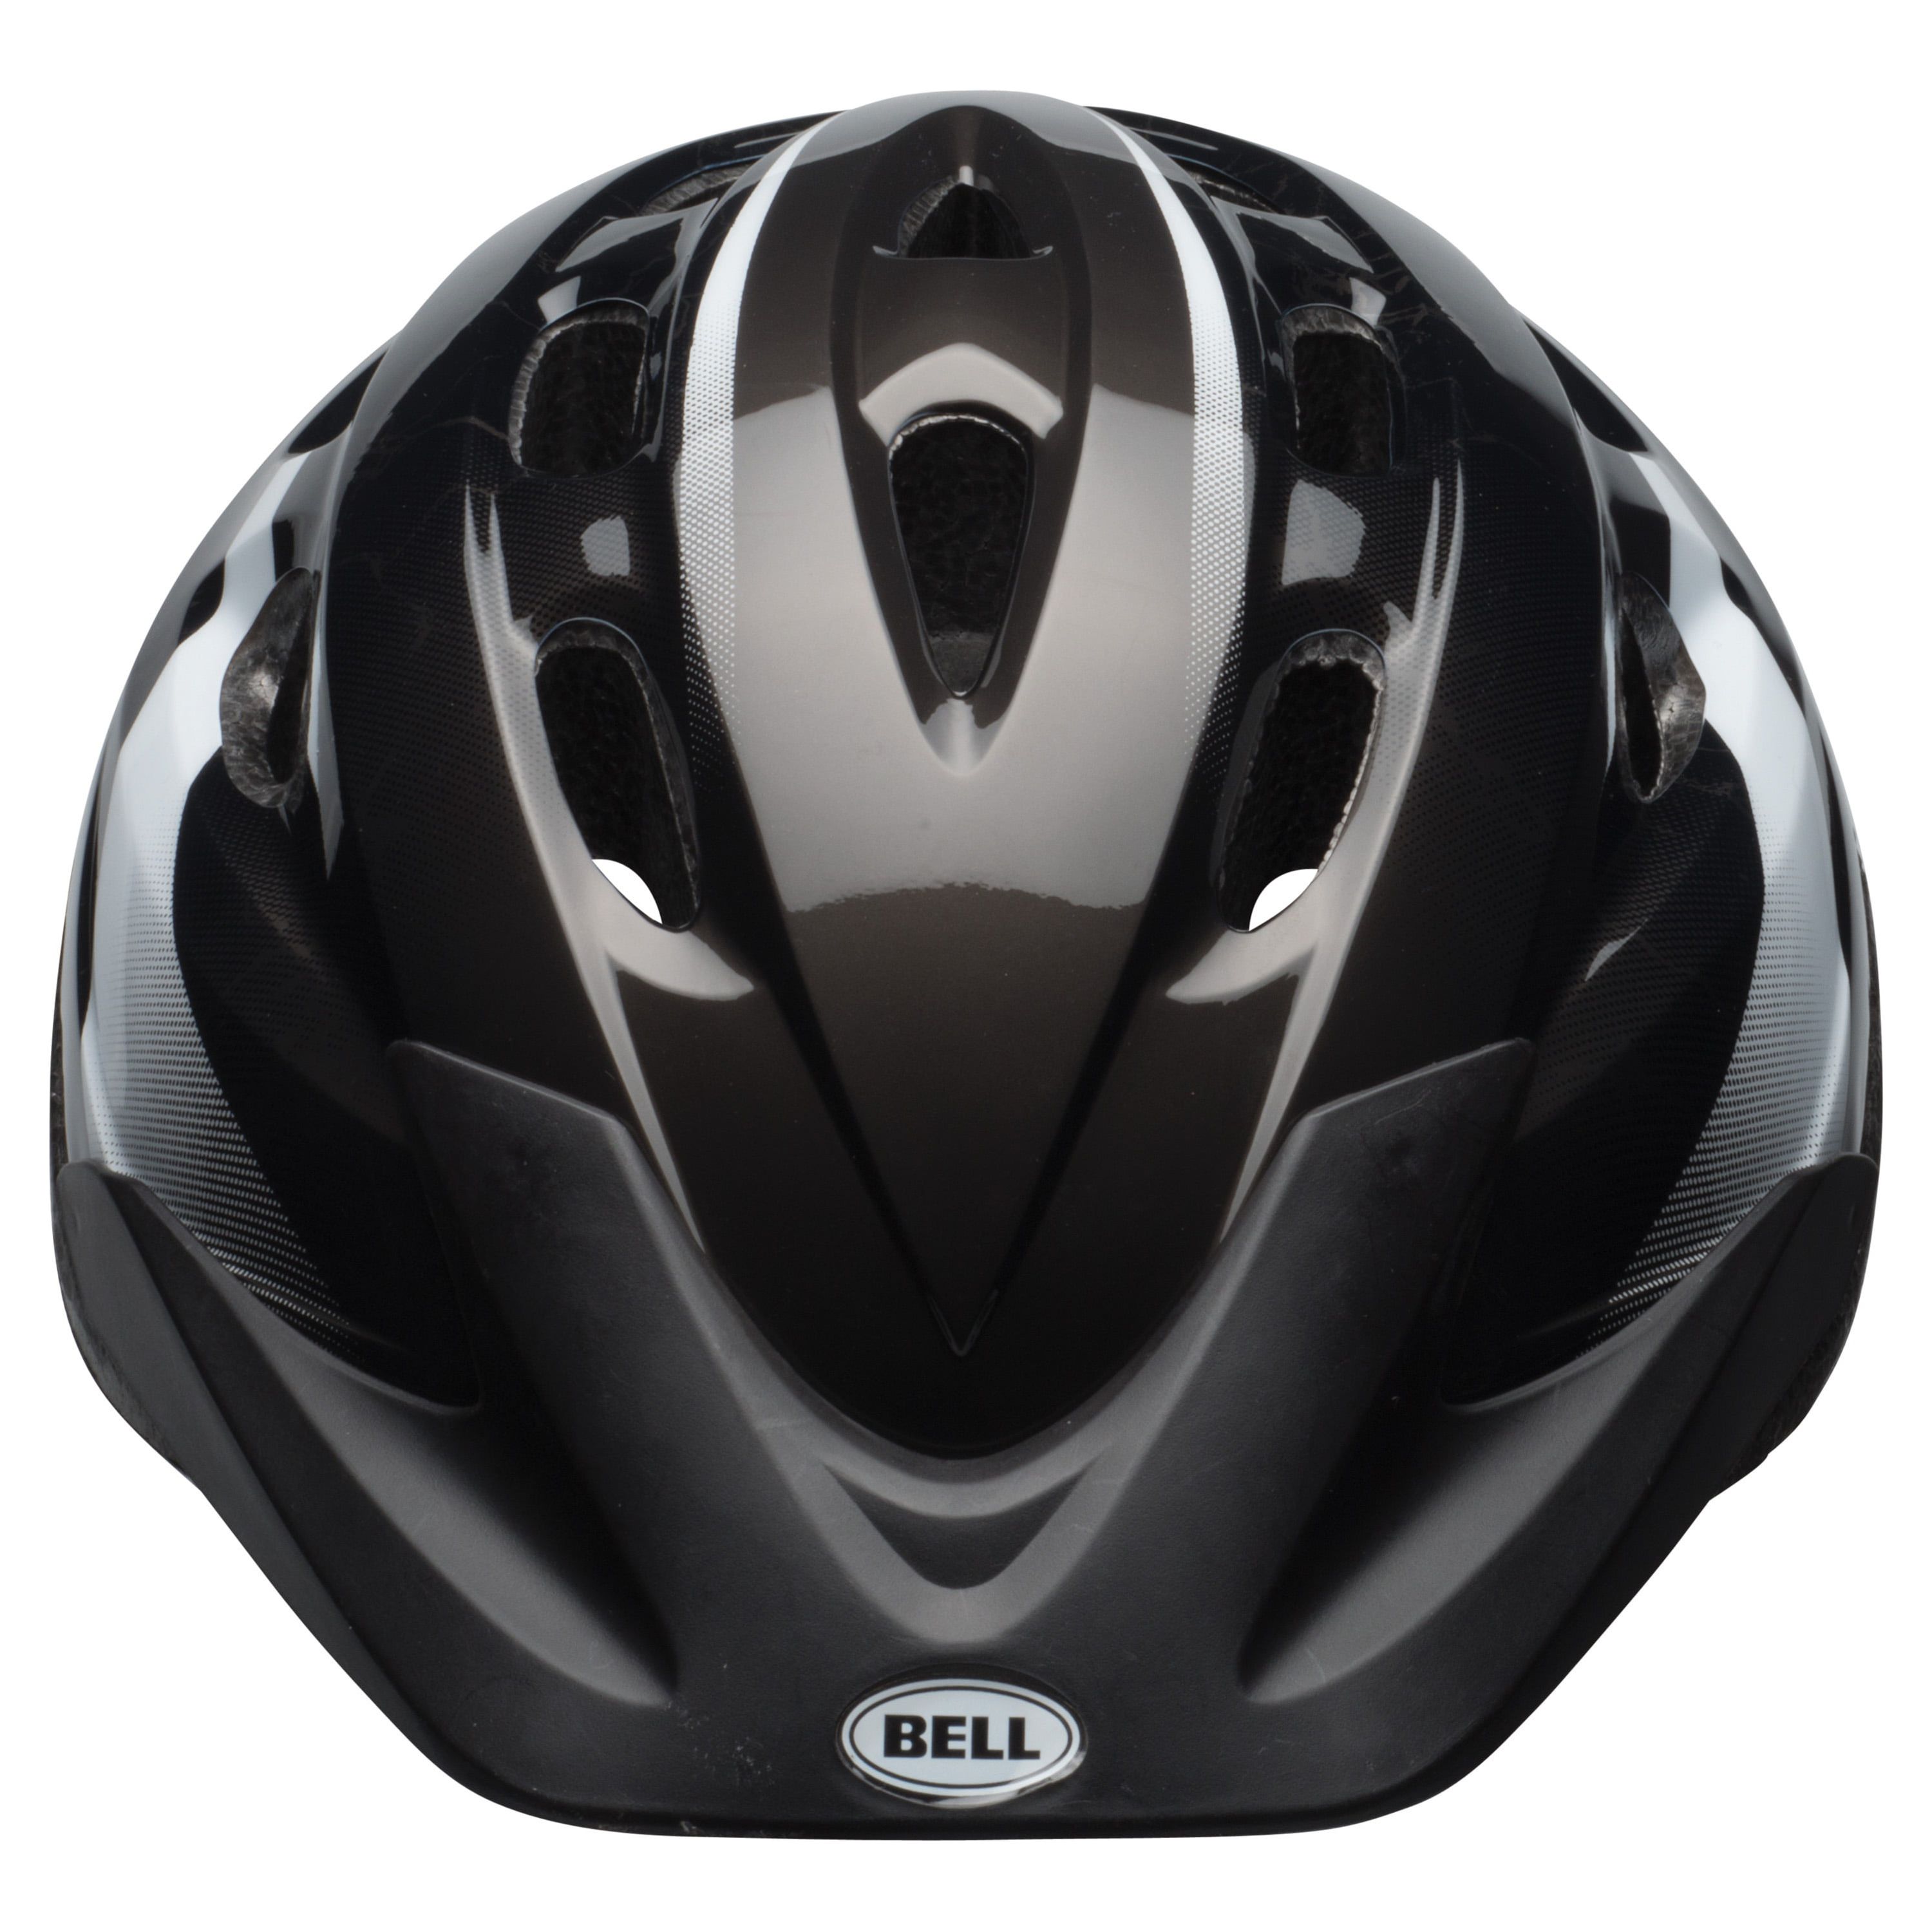 Bell Richter Subterfuge Boys Bike Helmet, Youth 8+ (54-58cm) - image 2 of 8